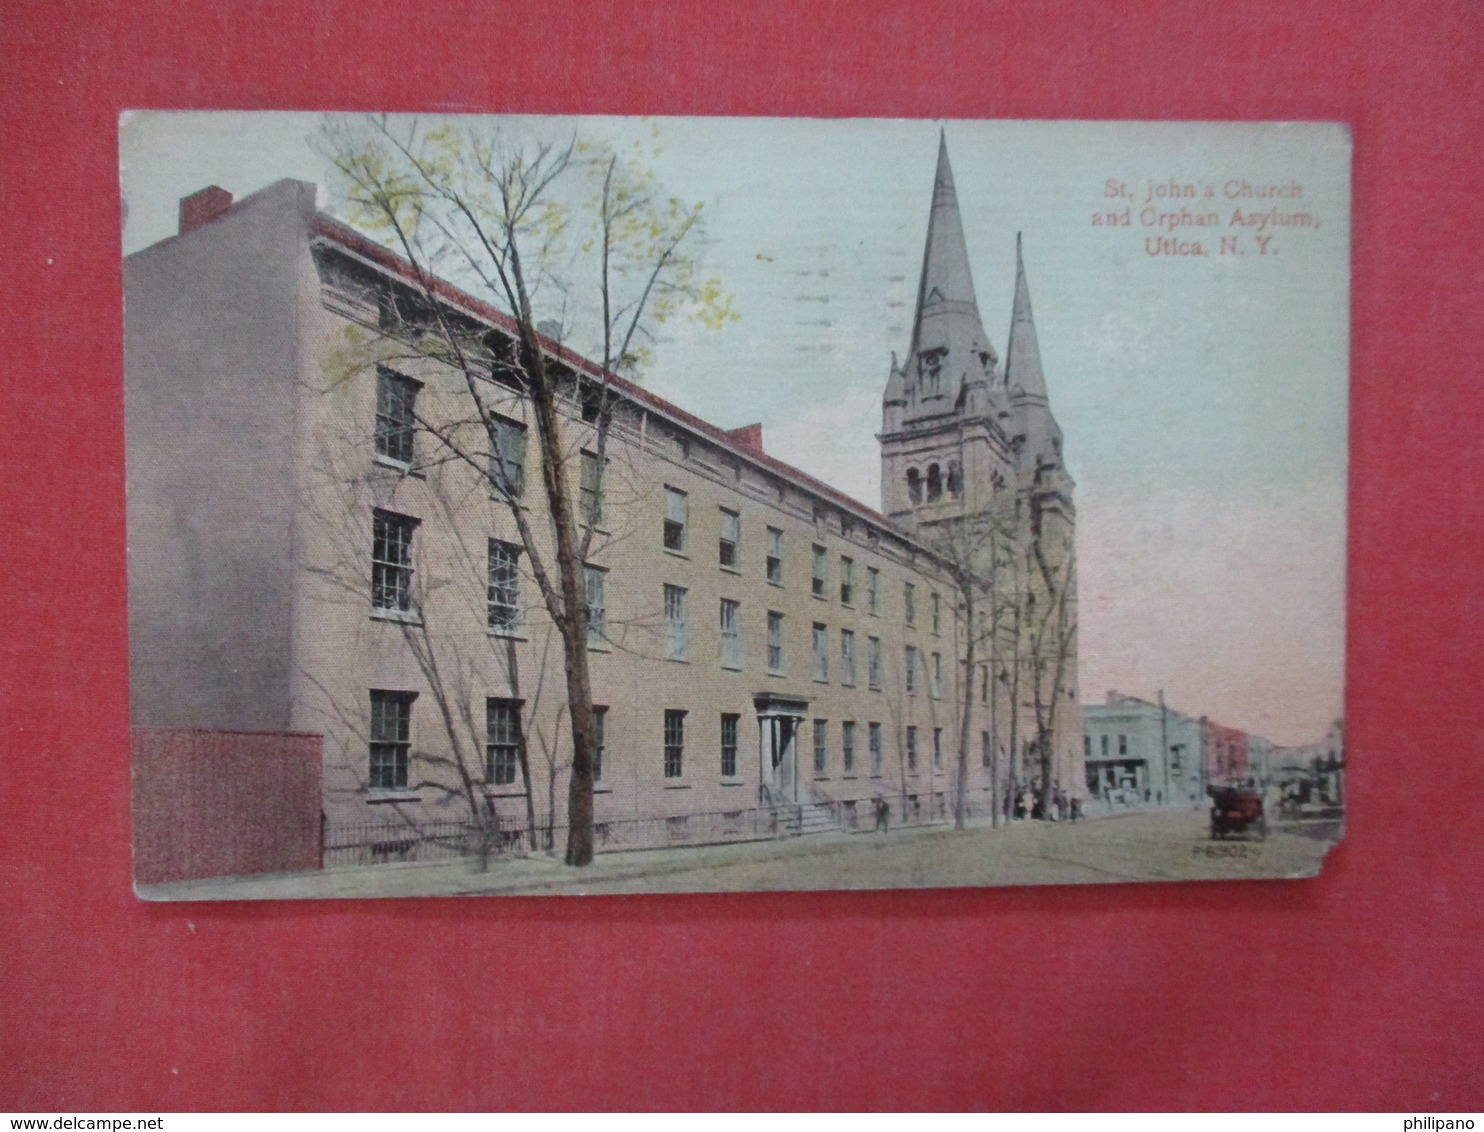 St John's Church & Orphan Asylum   - New York  Utica  Ref 4079 - Utica